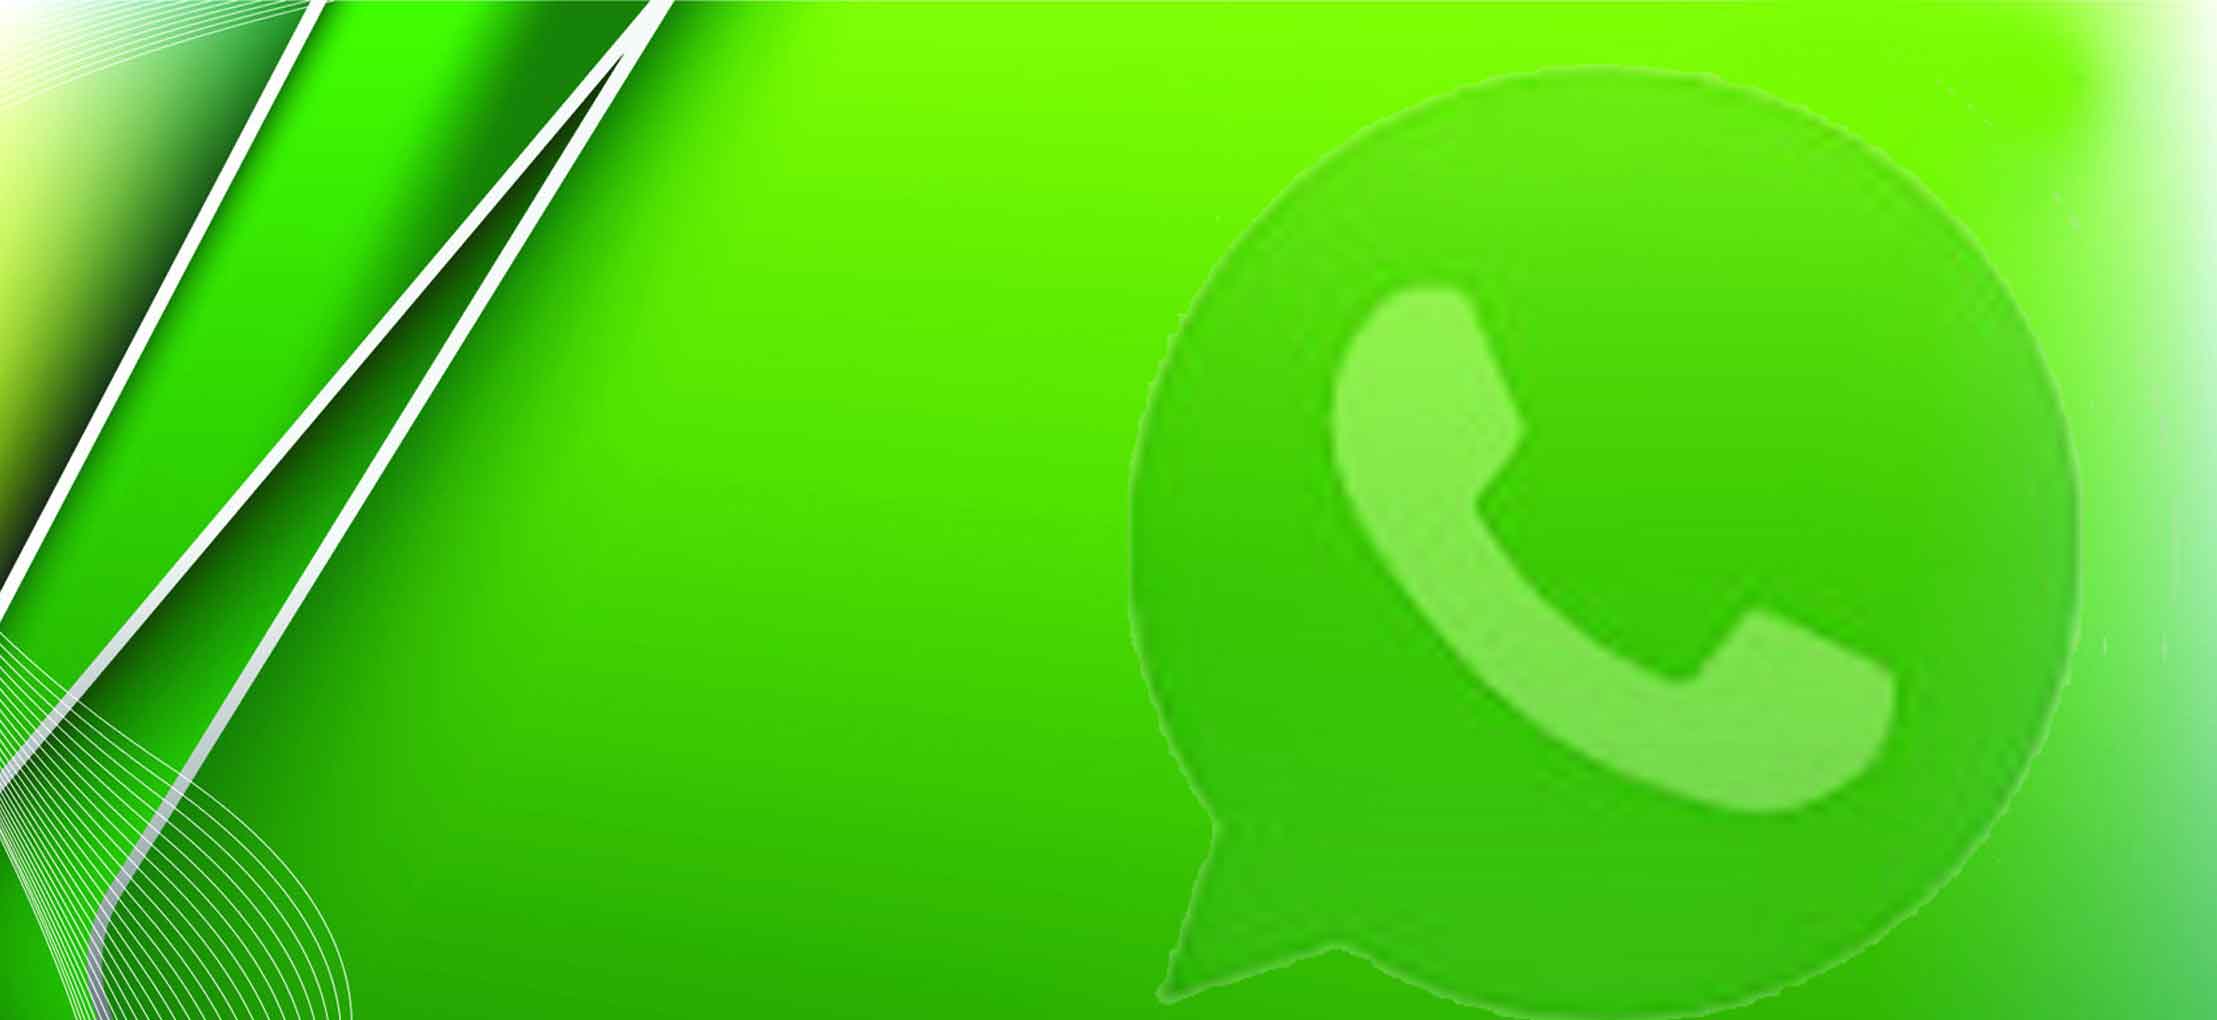 Best Whatsapp Group Links India